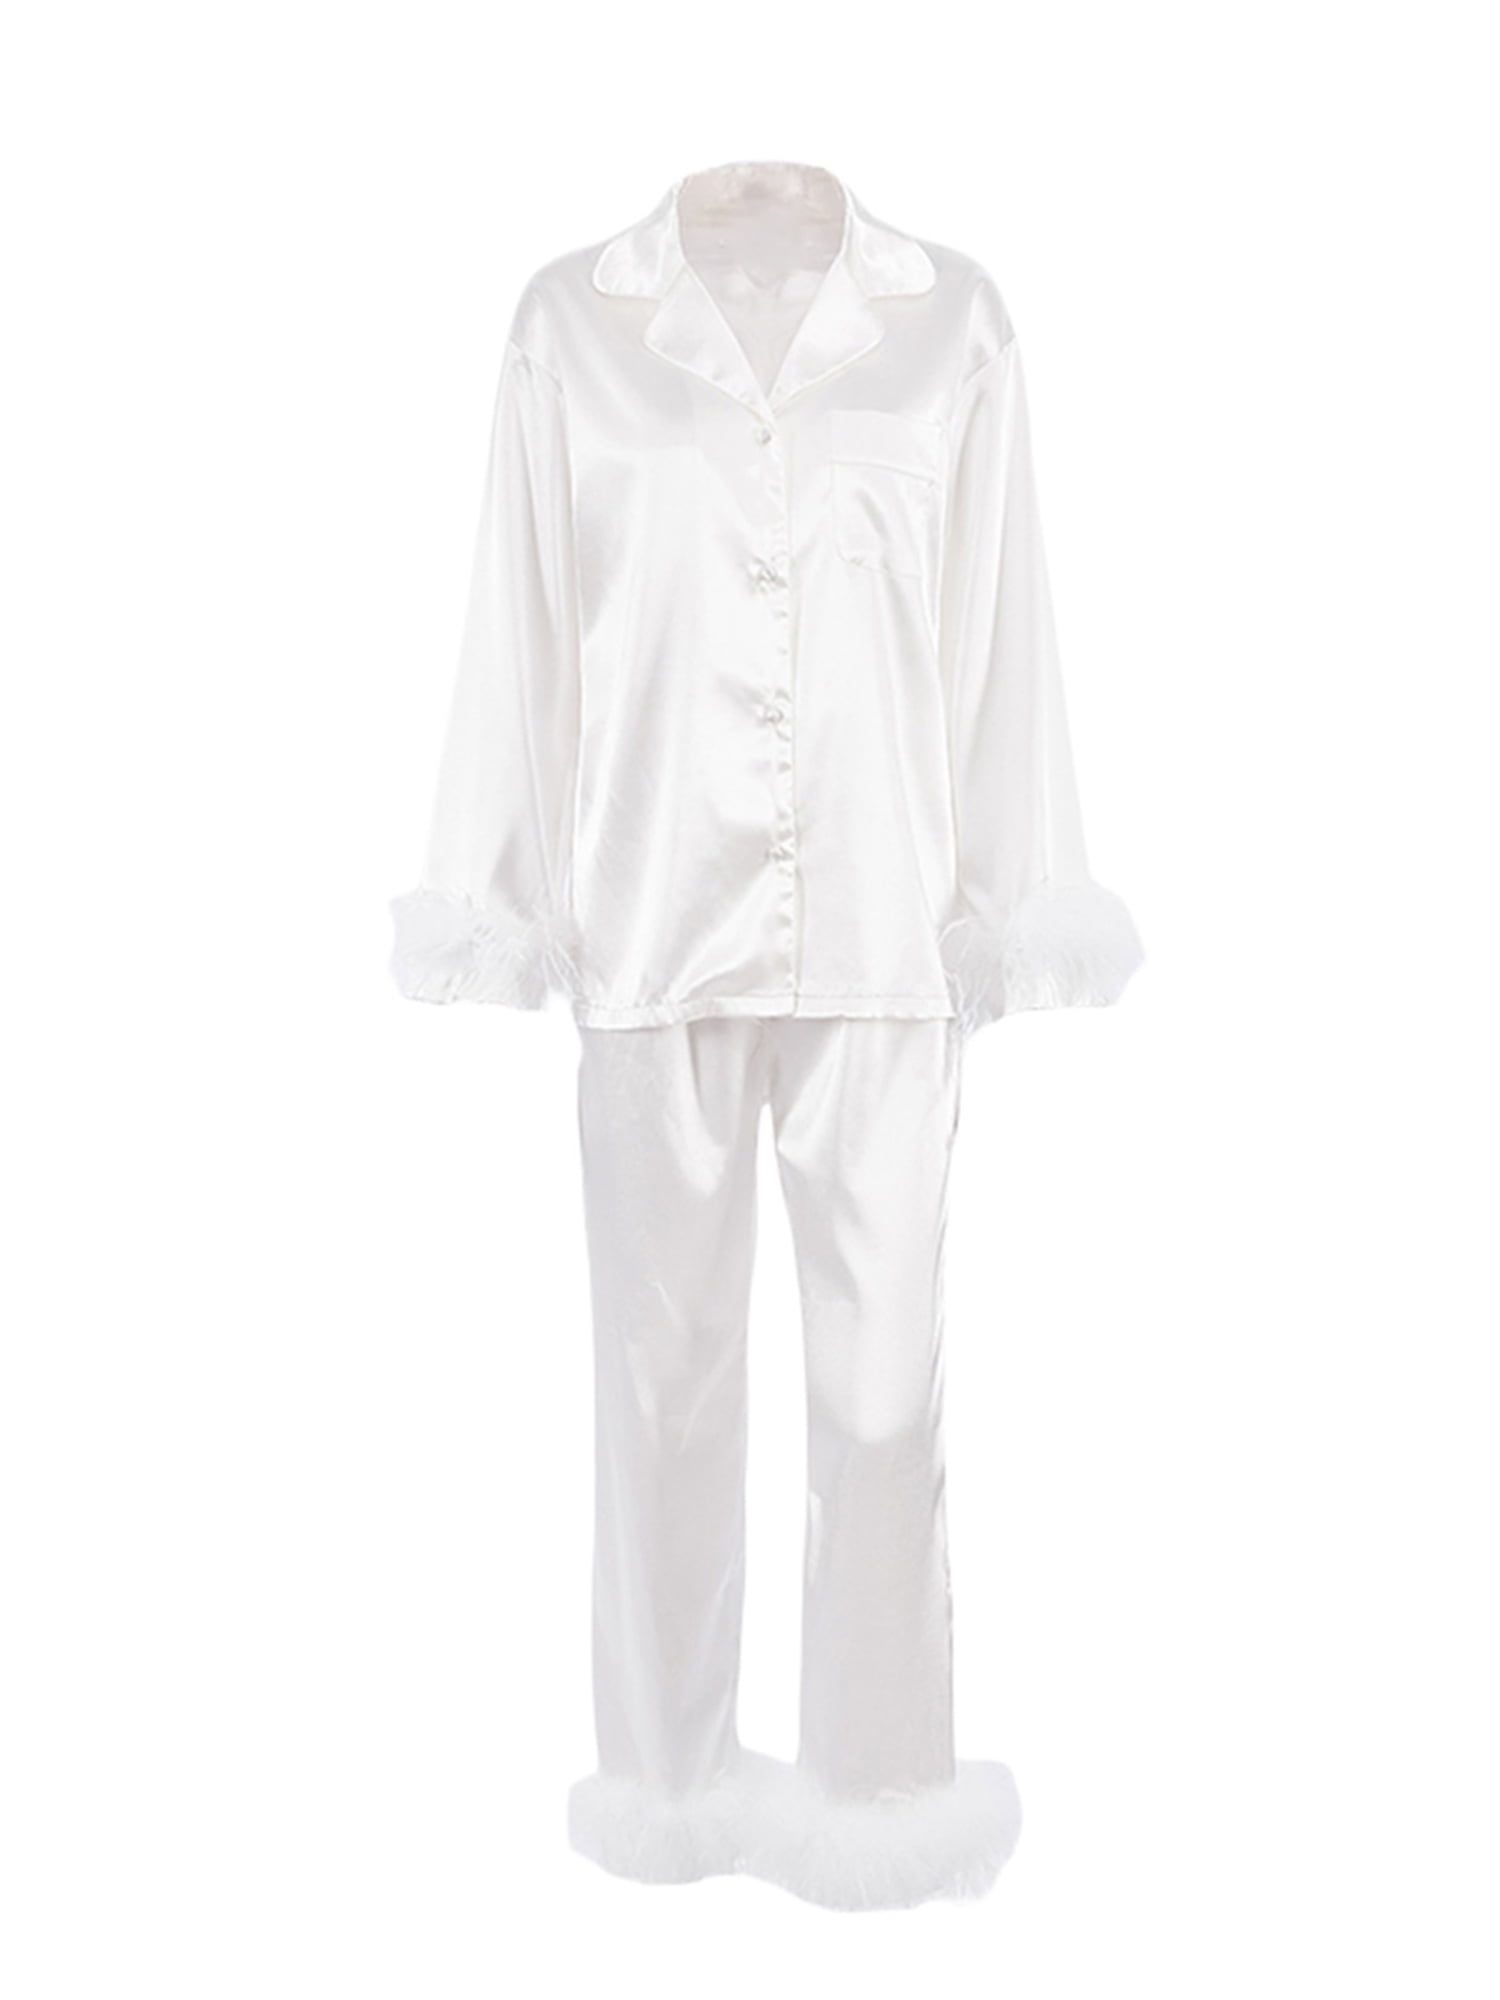 Ociviesr Womens Silk Satin Pajamas Set Two-Piece Sleepwear Loungewear Button-Down Sets Pajama Set for Women Long Sleeve White Long Sleeve Pant Set